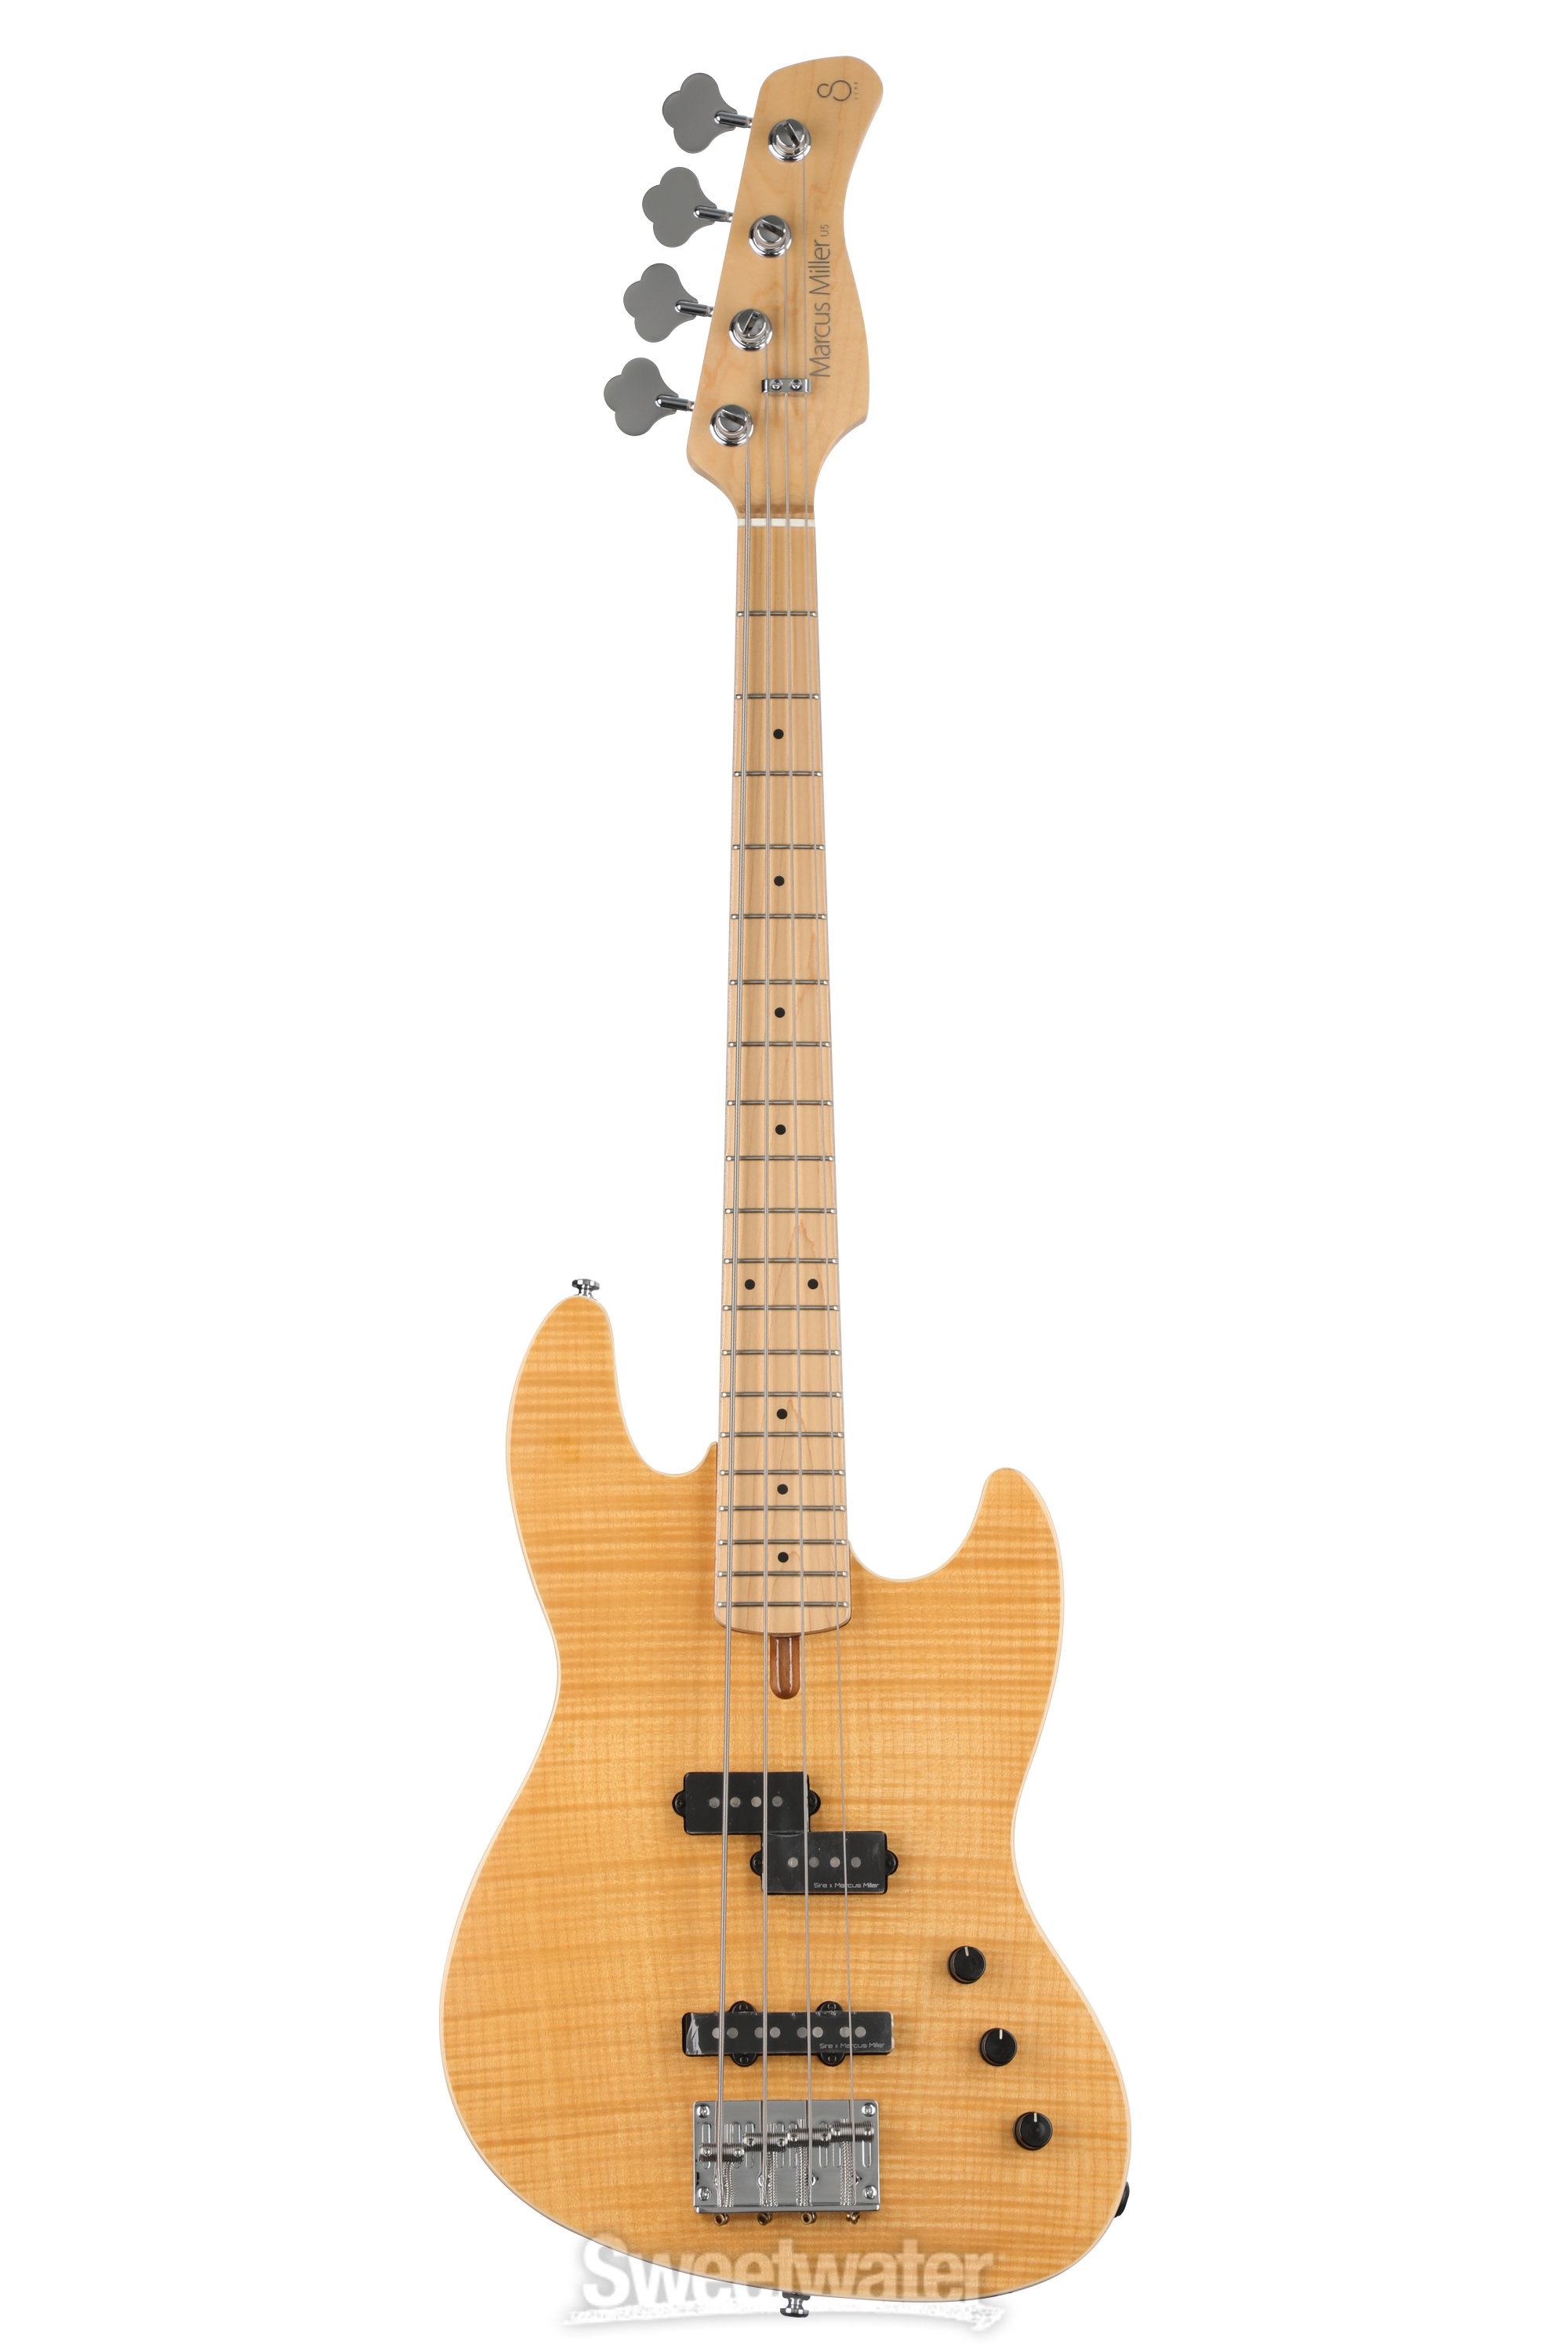 Sire Marcus Miller U5 Alder 4-string Bass Guitar - Natural | Sweetwater